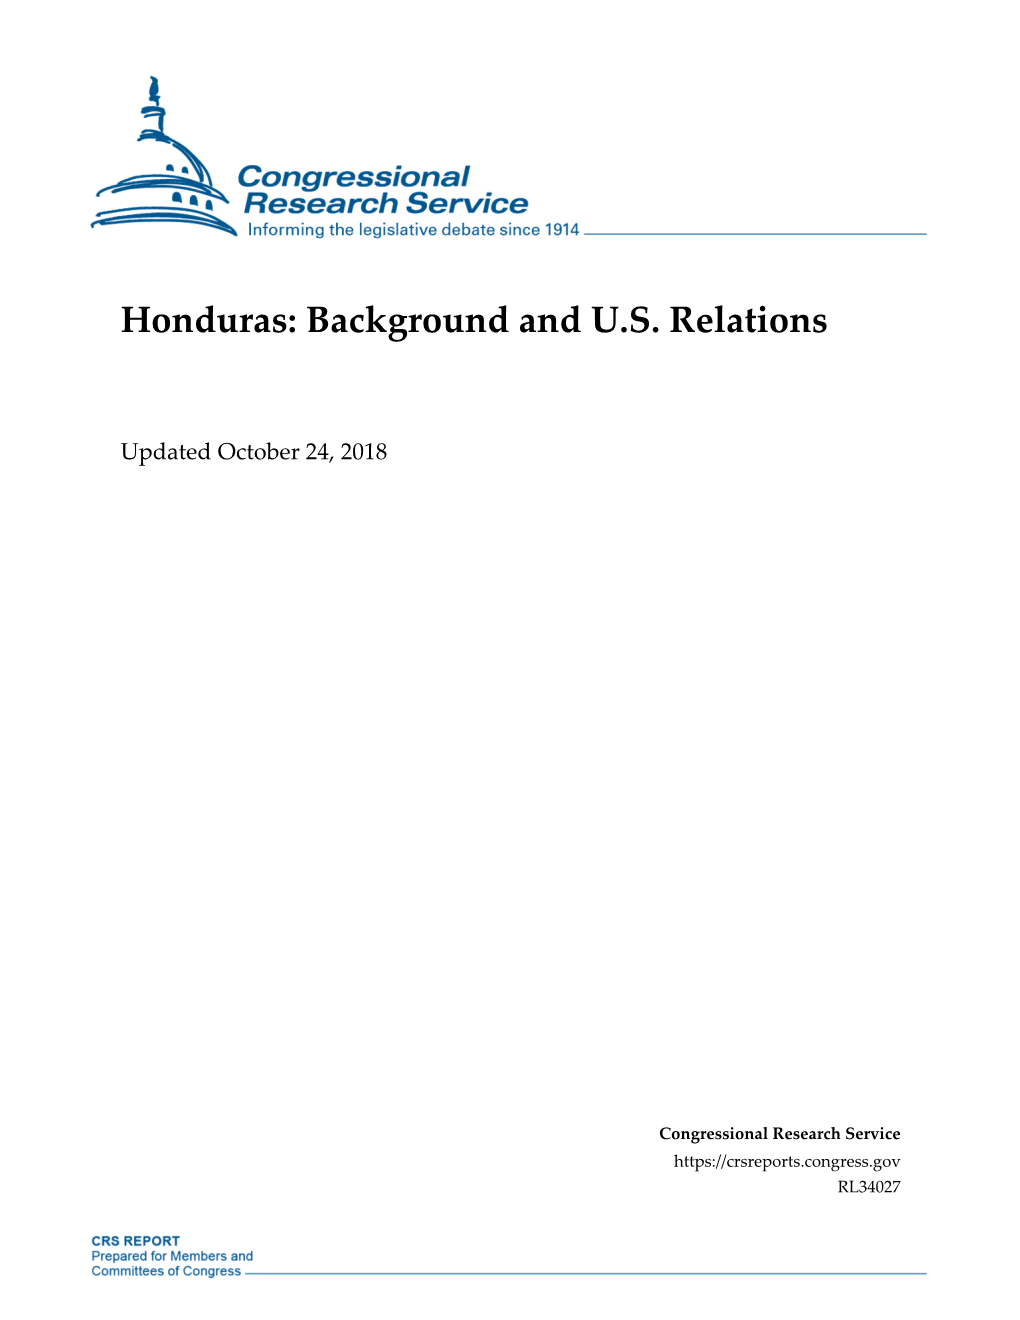 Honduras: Background and U.S. Relations